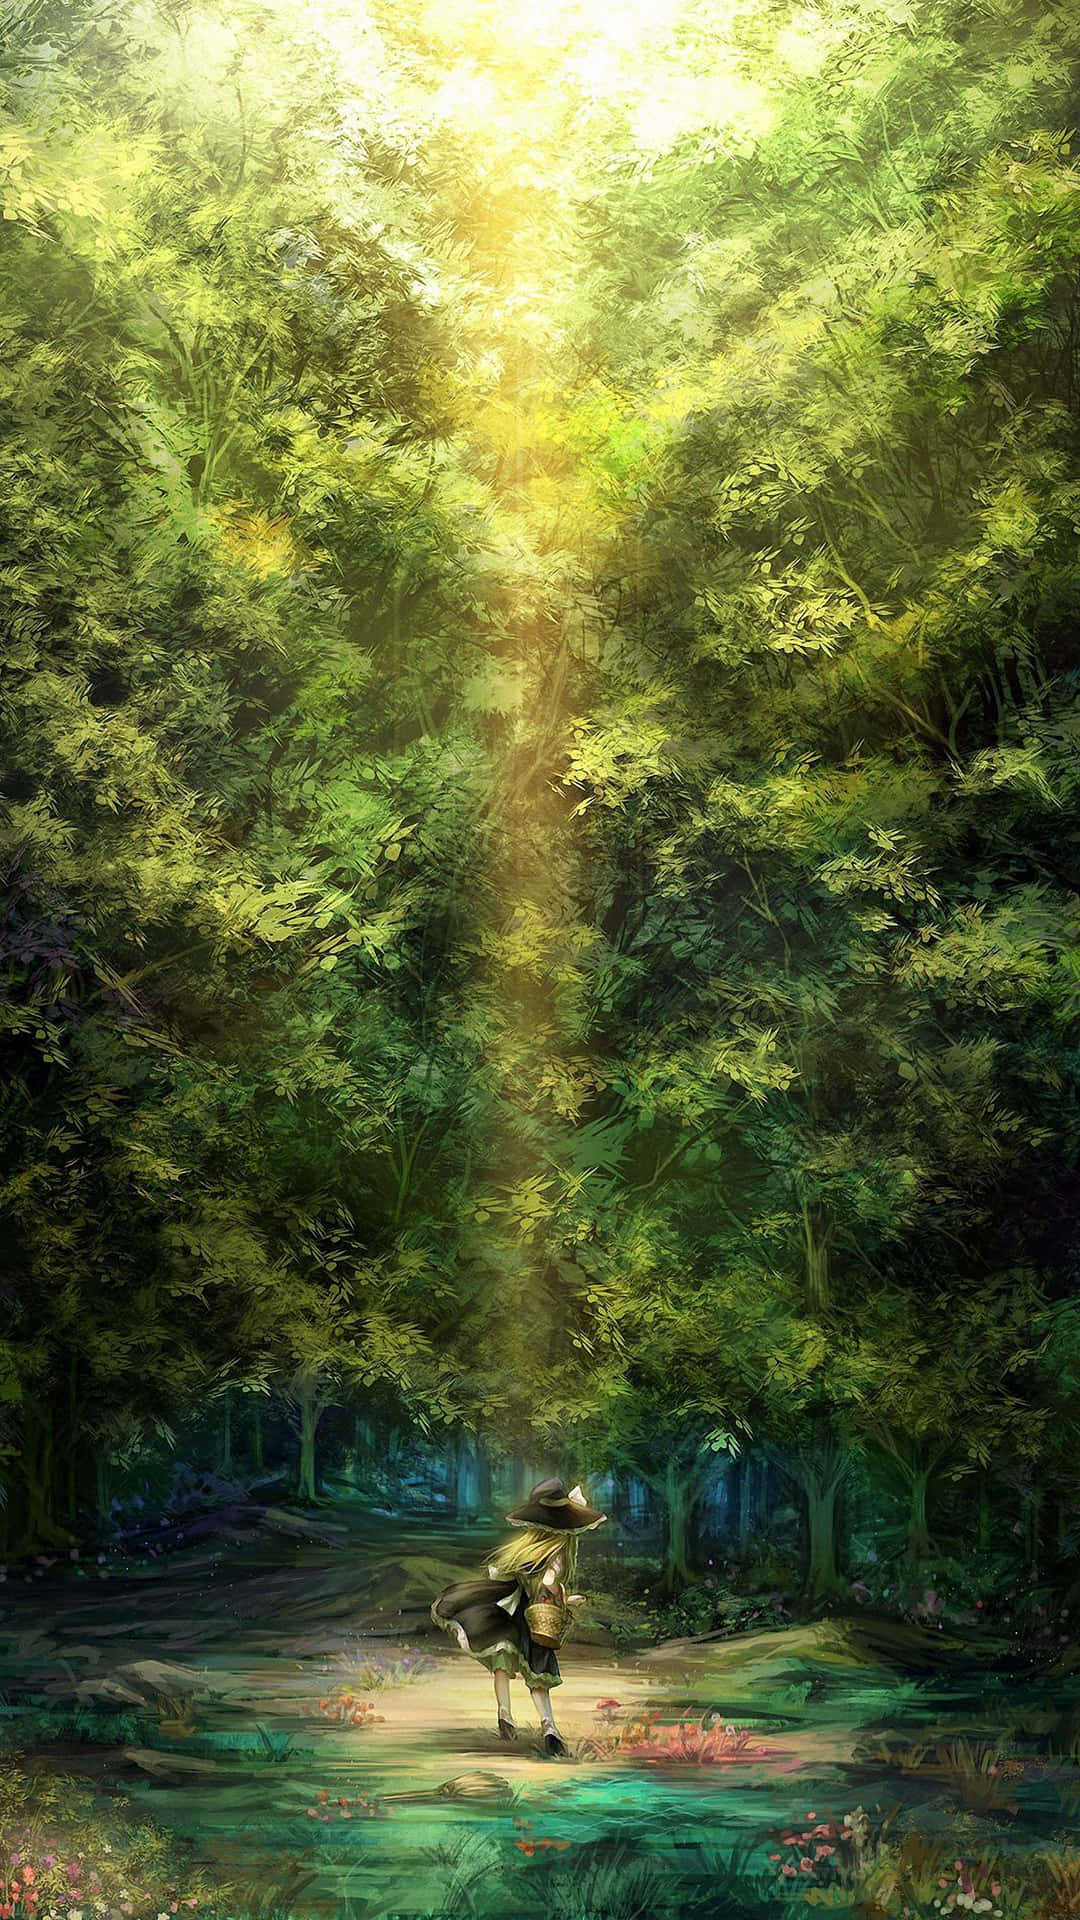 Rejsgennem Den Fantastiske Anime Skov.